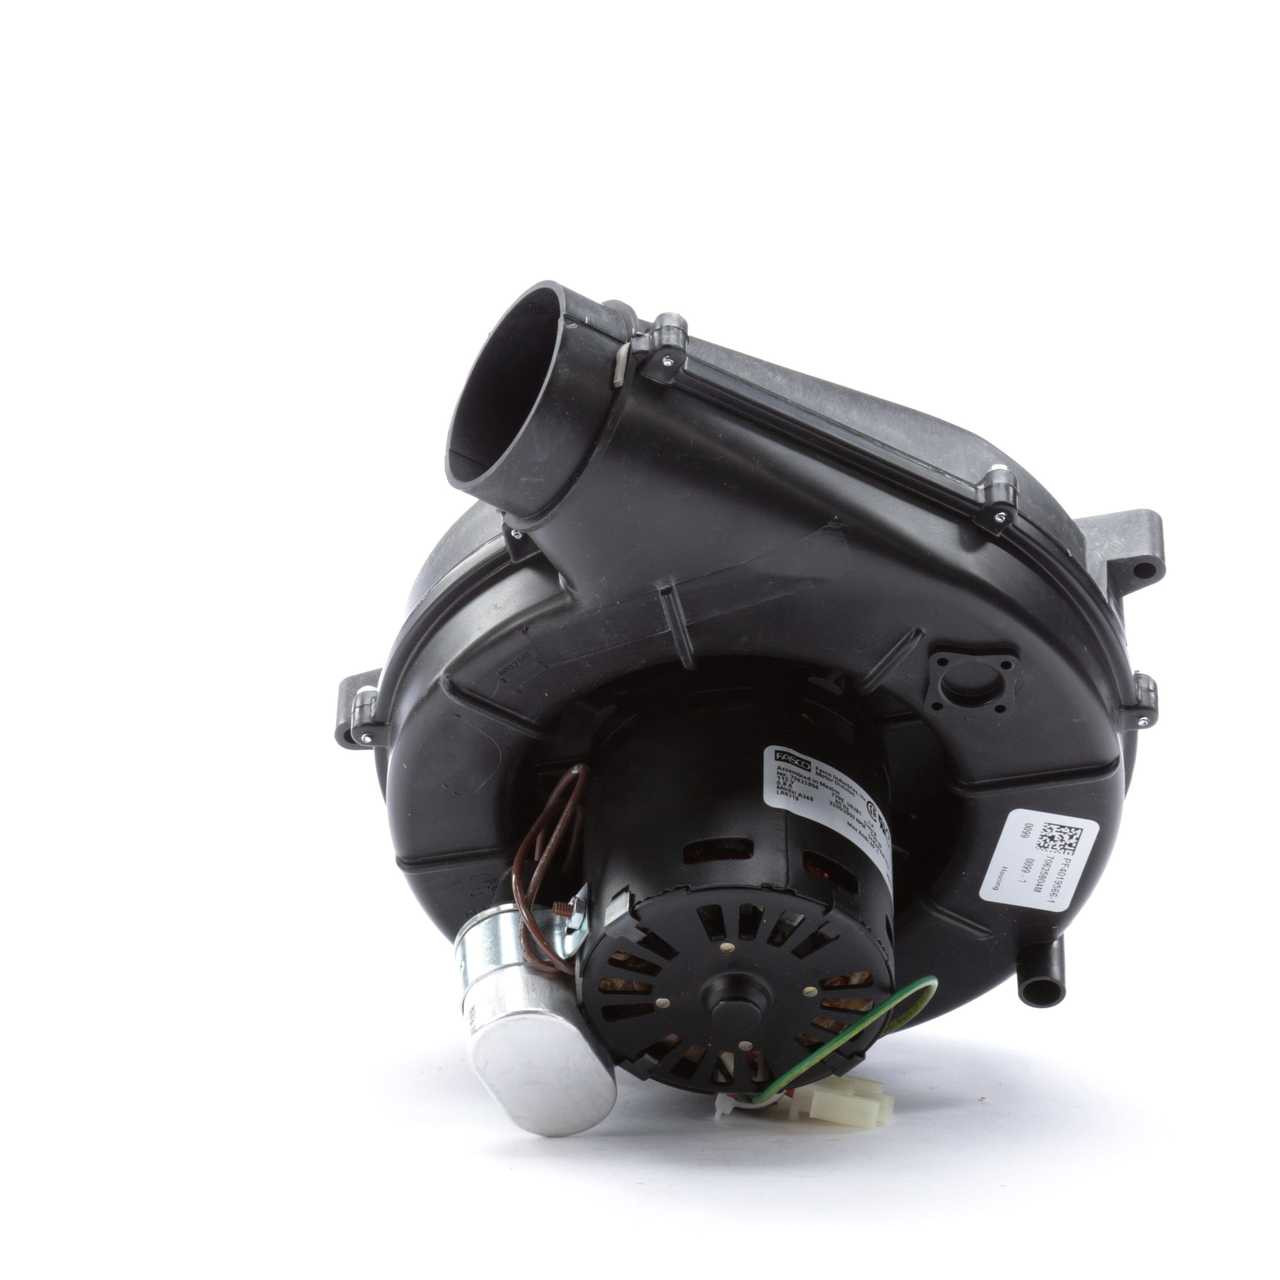 Fasco A195 Furnace Draft Inducer Blower Motor for sale online 